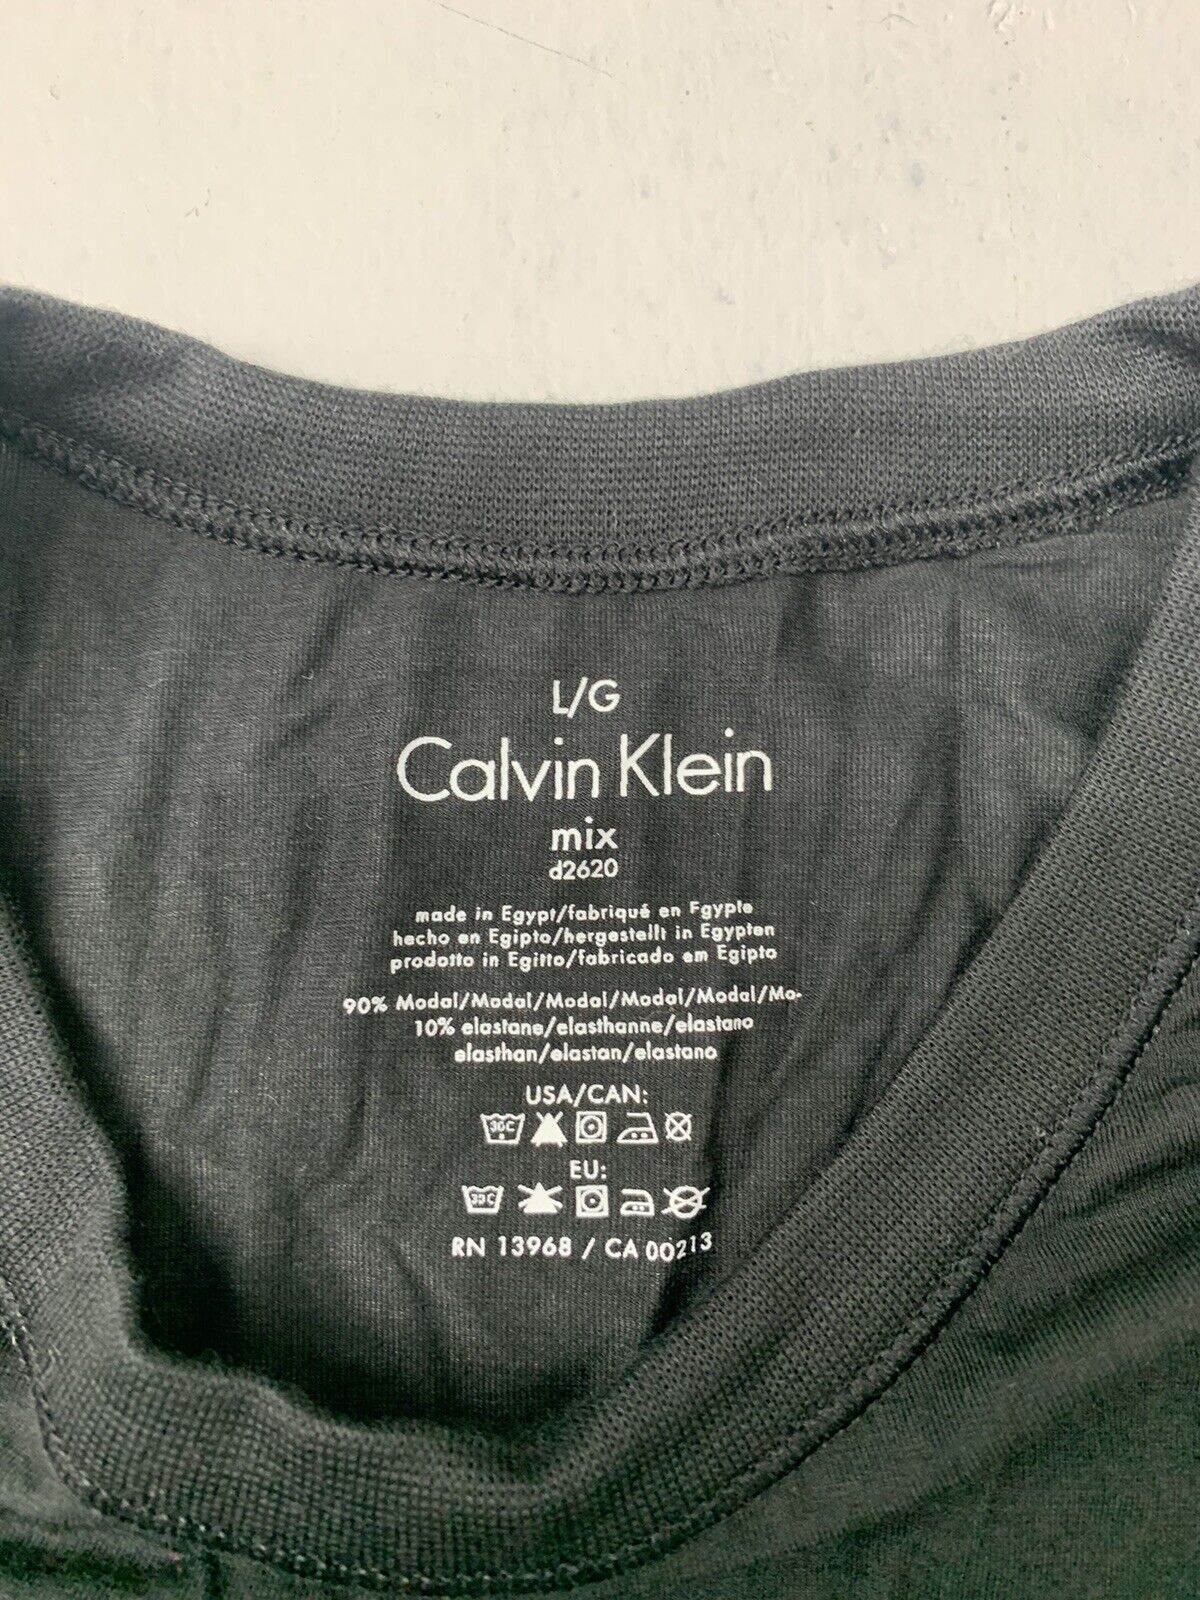 Calvin Klein Women's Clothing, Clothes for Women